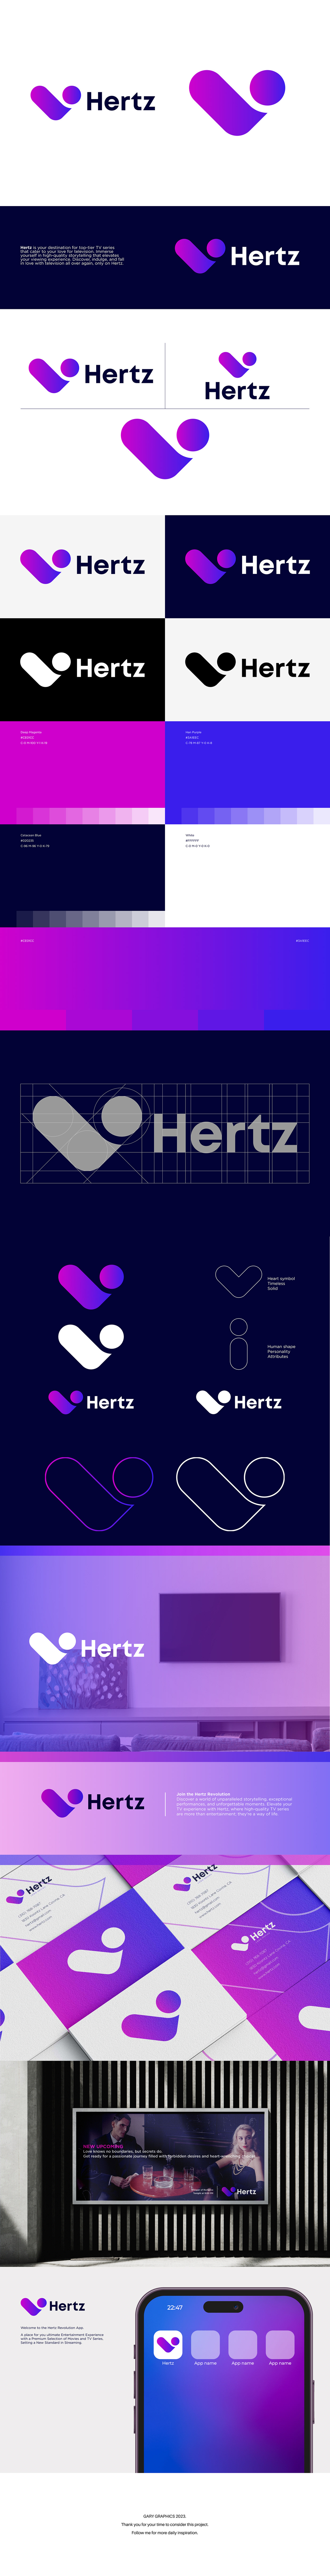 brand identity television app design Logo Design HERTZ Brand Presentation brandbook moodboard heart Web Design 